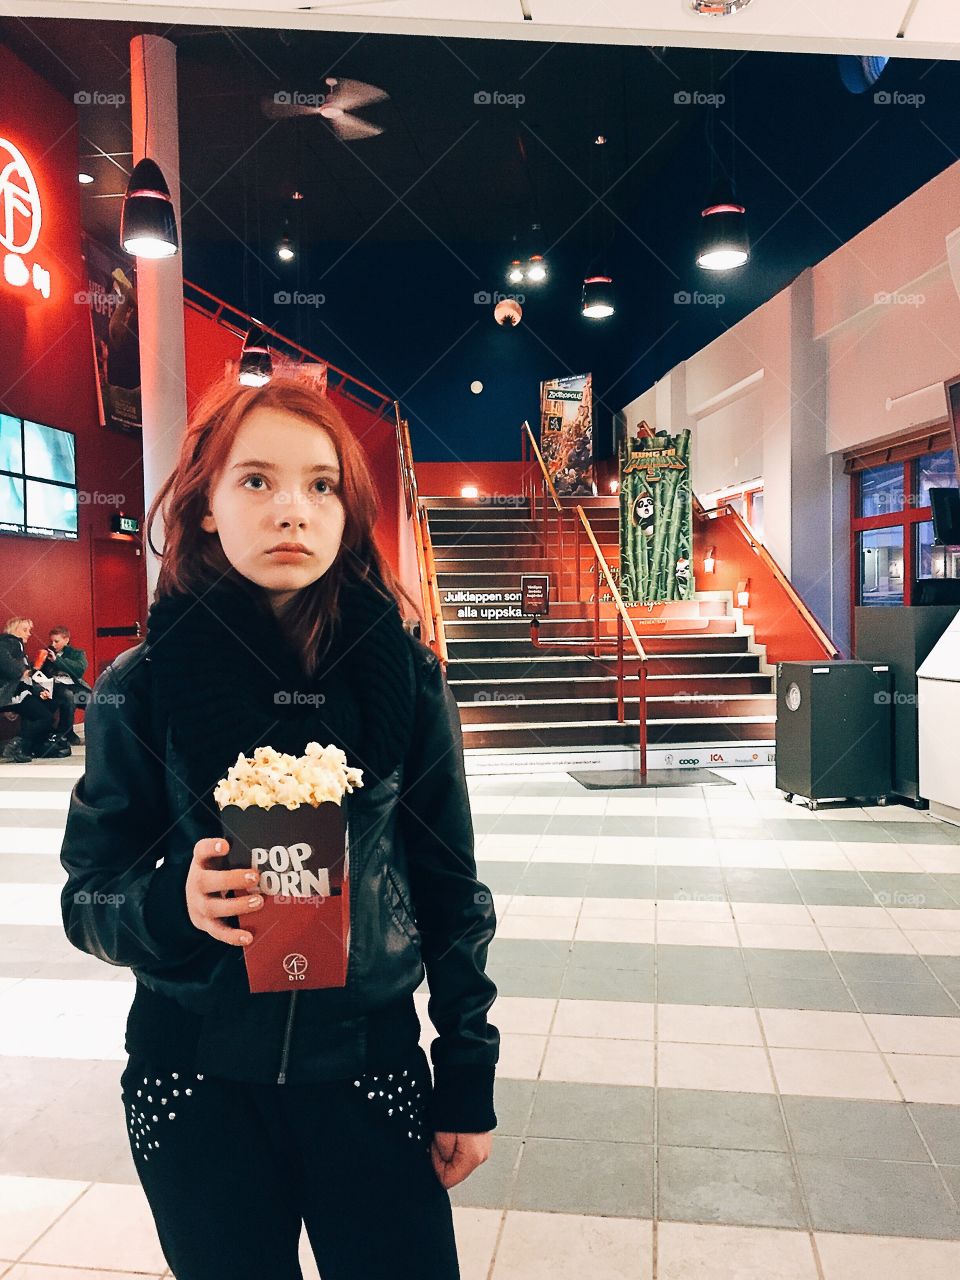 At the movies